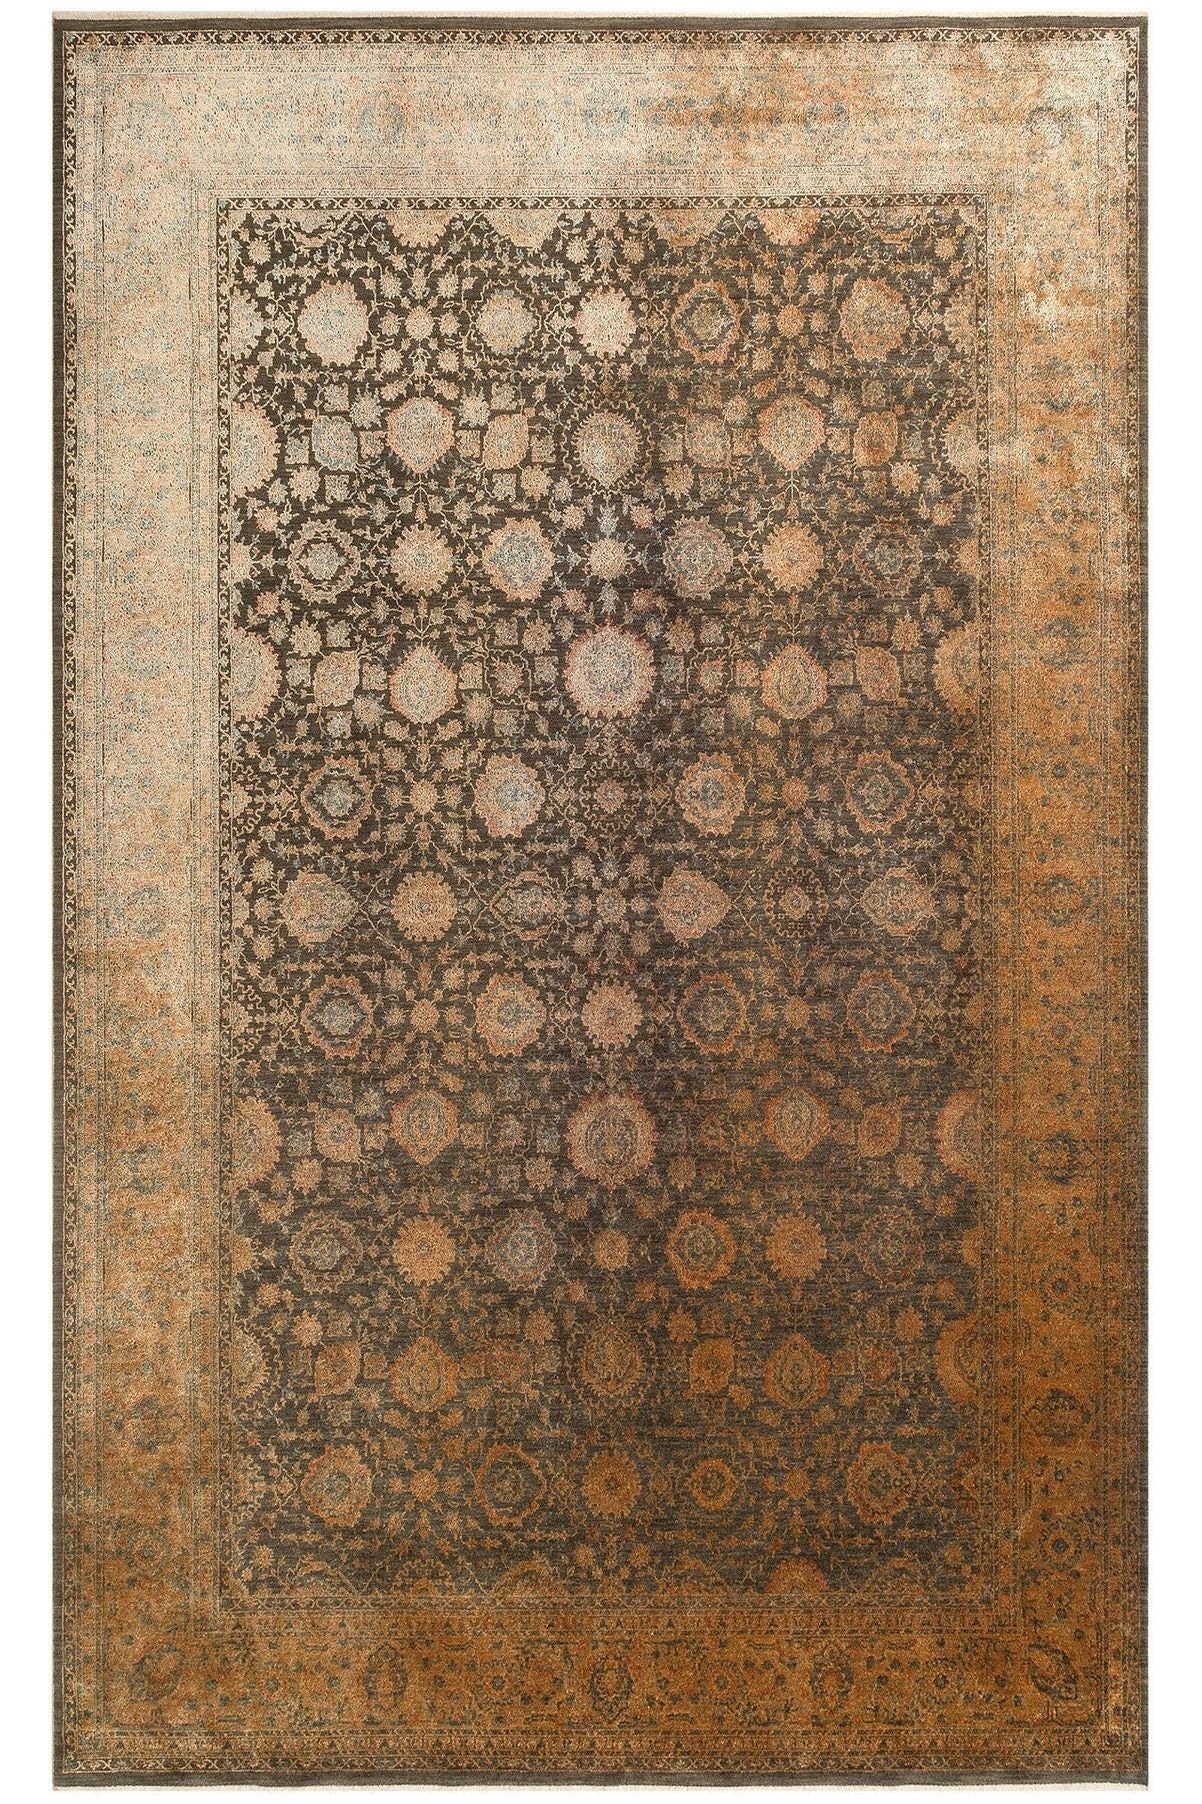 #Turkish_Carpets_Rugs# #Modern_Carpets# #Abrash_Carpets#Lhr 01 Terra